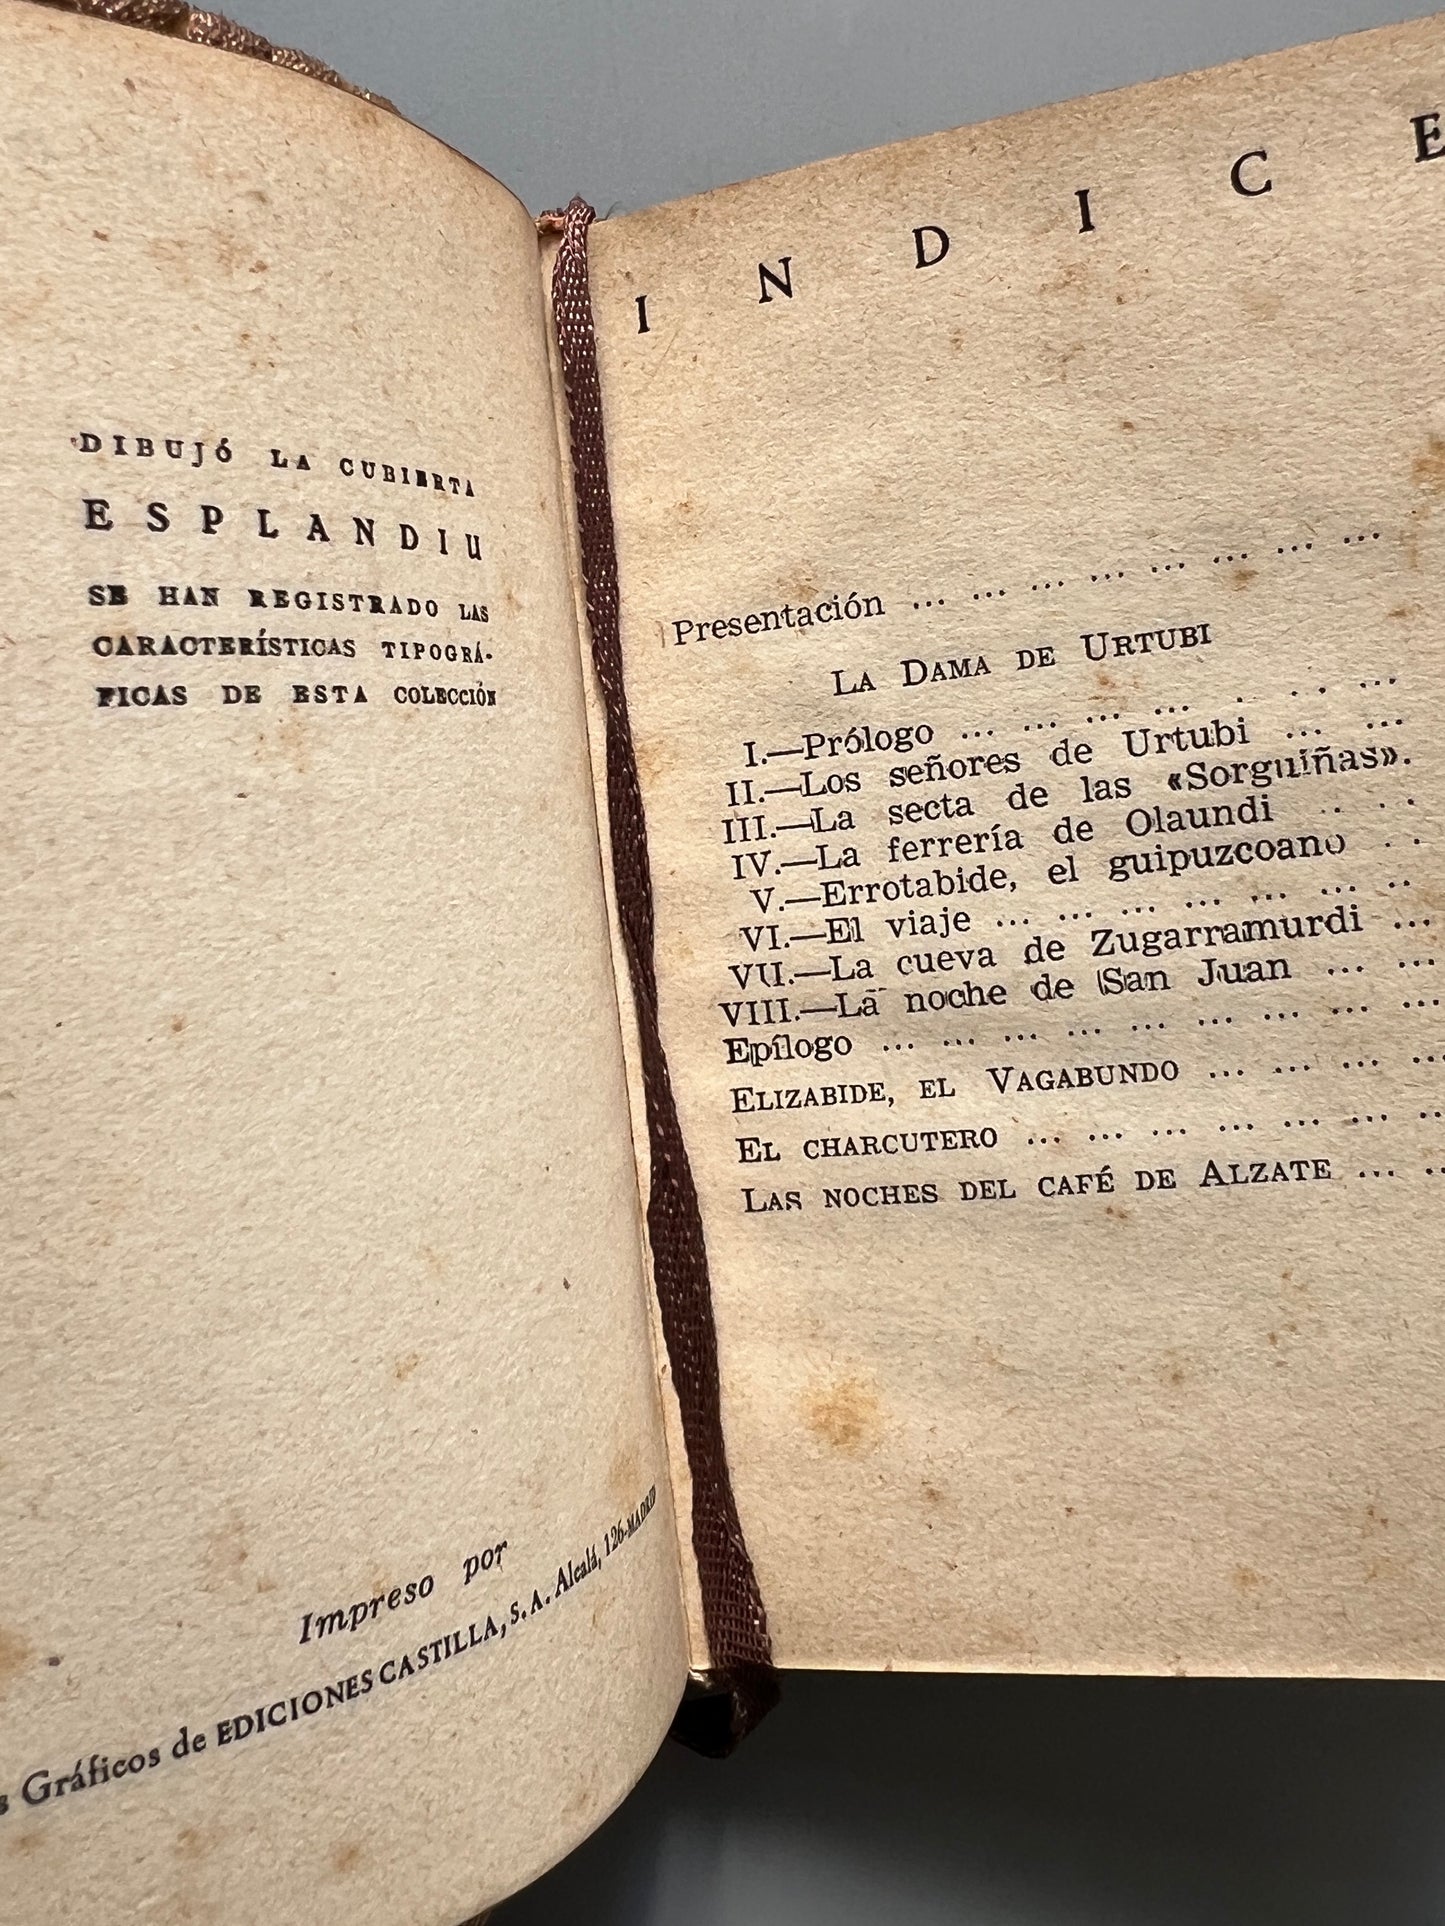 La Dama de Urtubi y otras historias, Pío Baroja - Afrodisio Aguado, ca. 1949